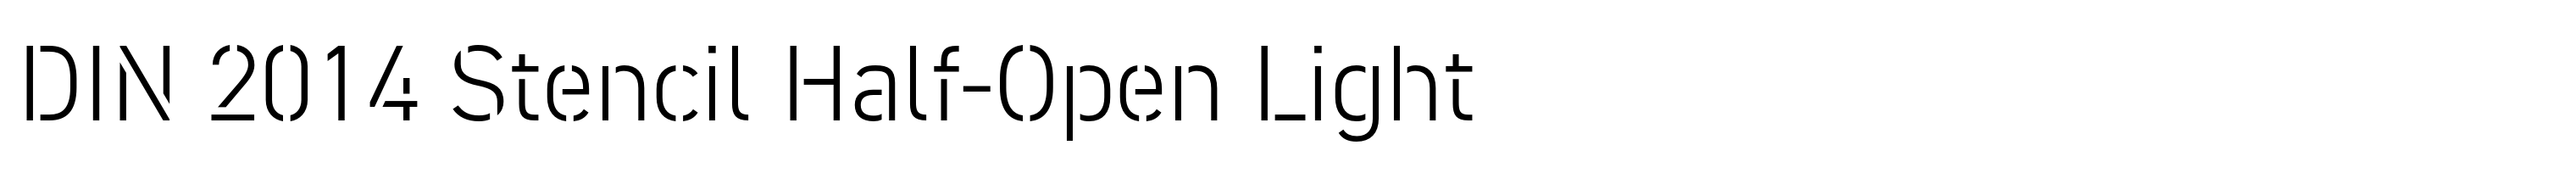 DIN 2014 Stencil Half-Open Light